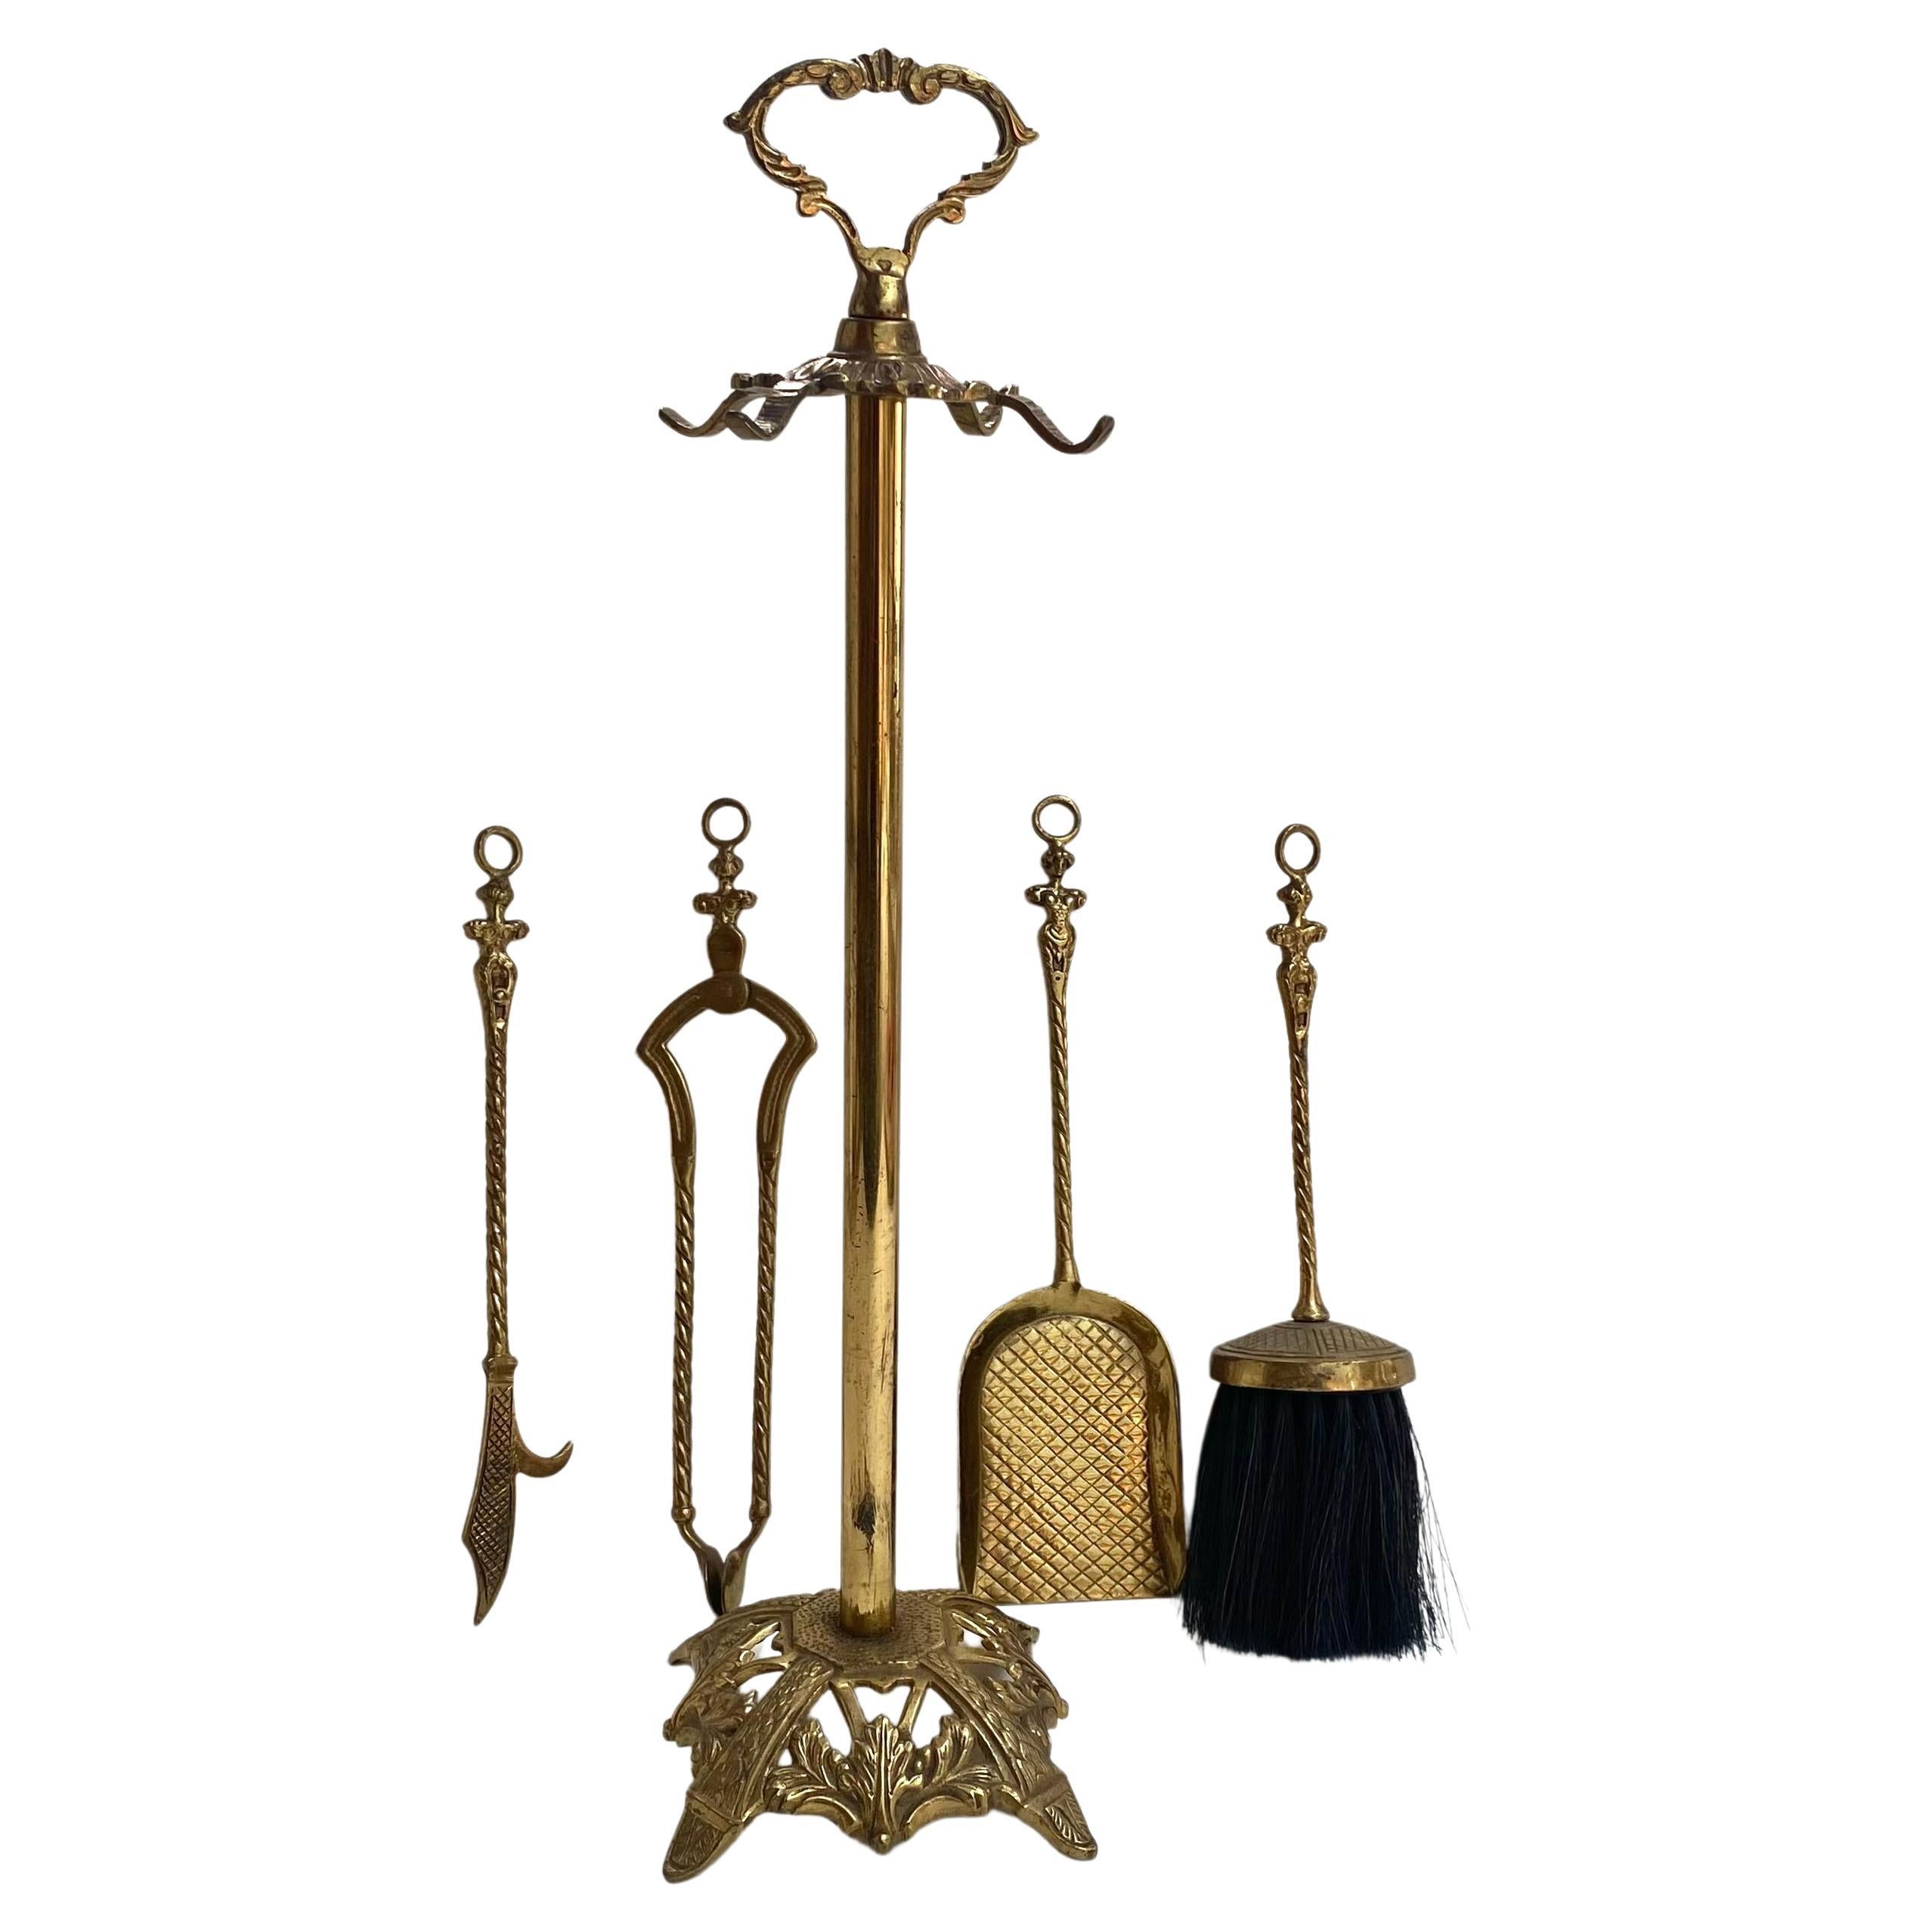 Antique Fireplace Tools Set of 4-Piece Bronze Brass Accessories